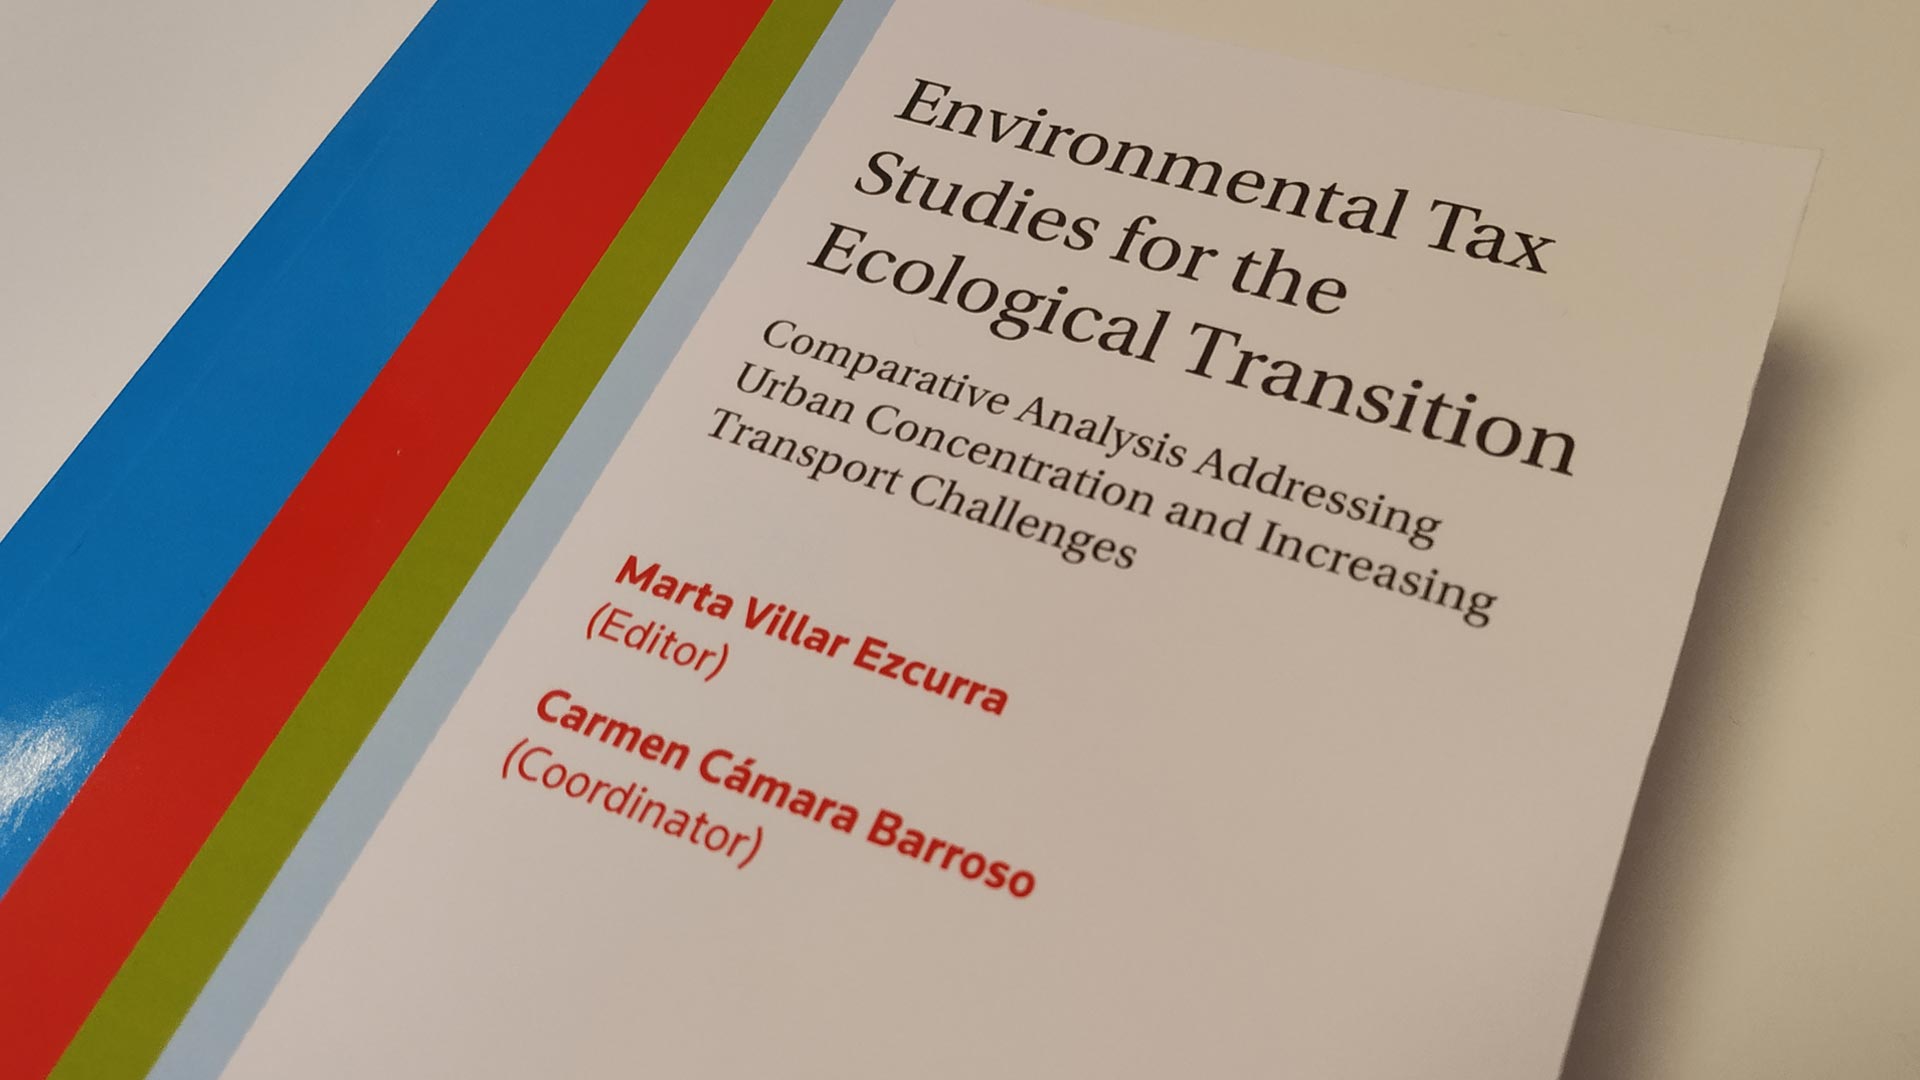 “Taxes on Air Pollution in Spain”, nou article de membres d’ENT dins el llibre Environmental Tax Studies for the Ecological Transition